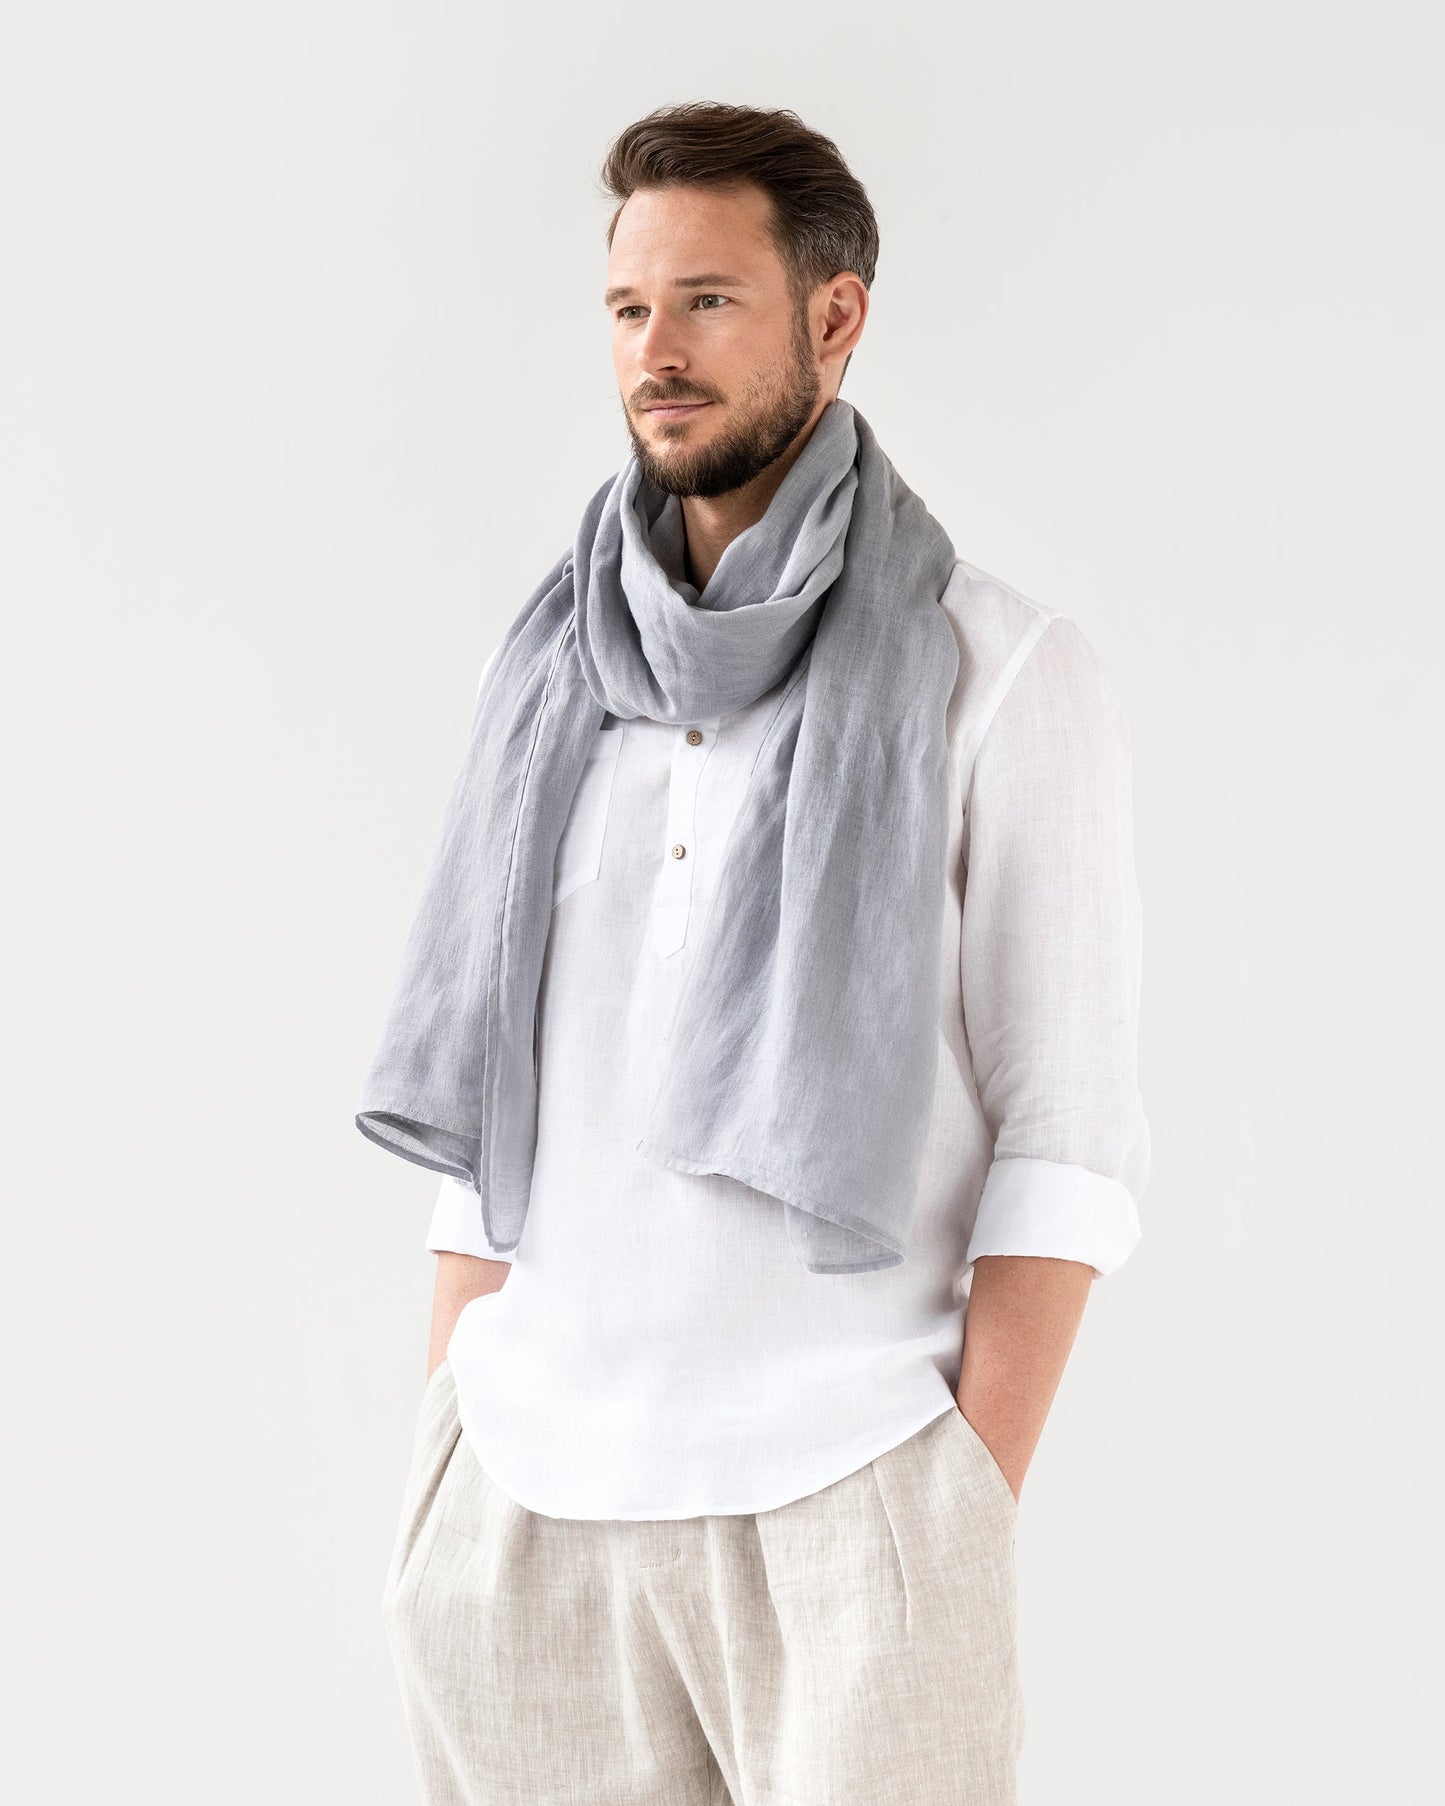 Men's linen scarf in Light gray - MagicLinen